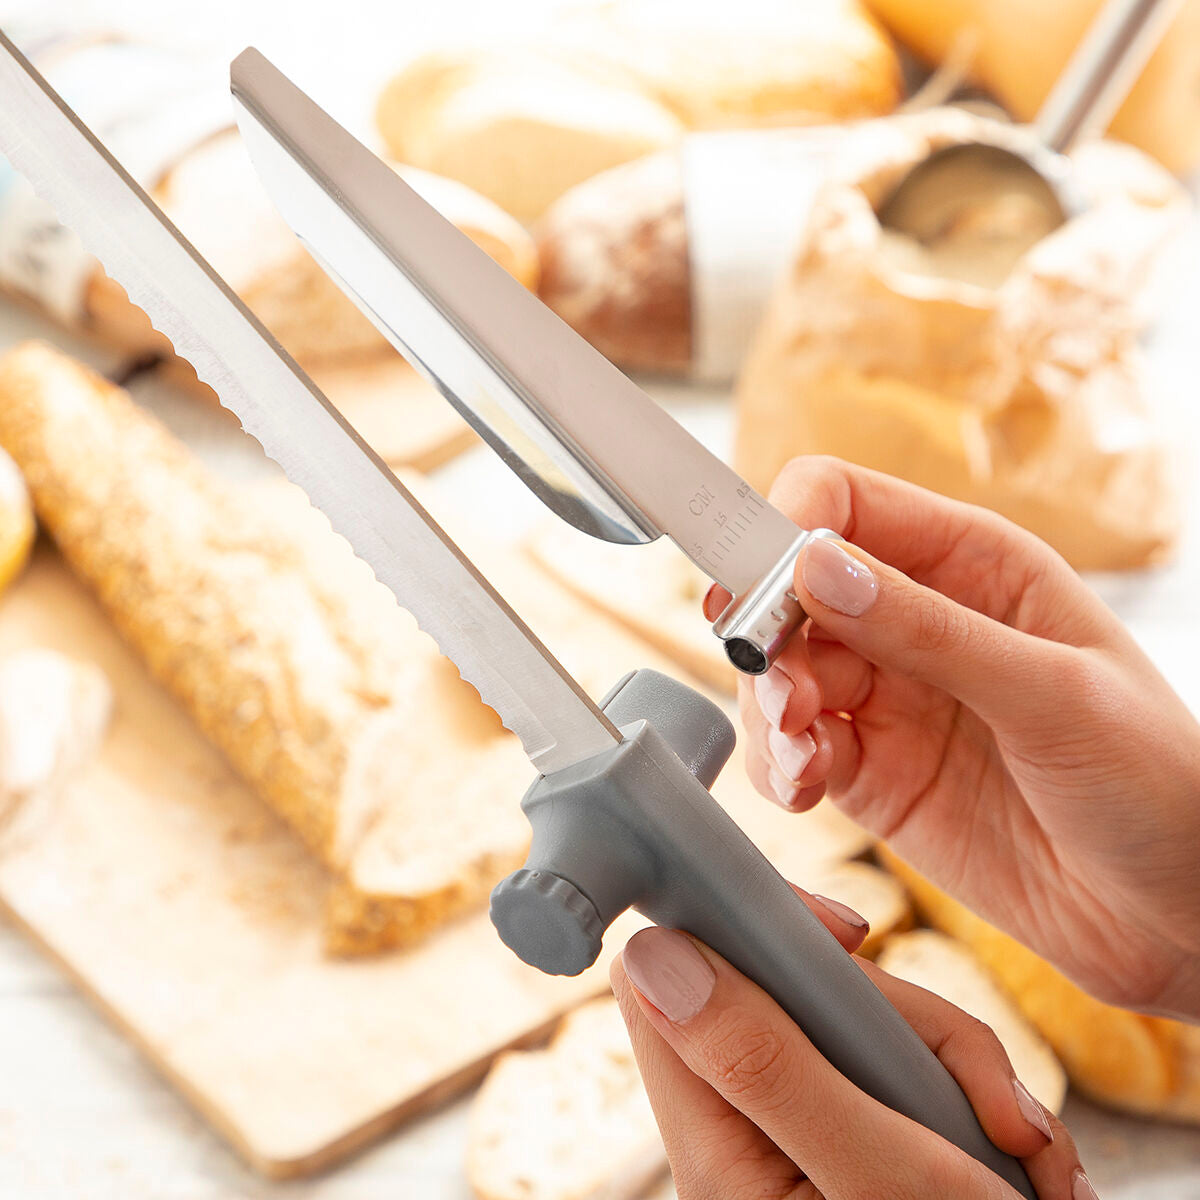 Нож за хляб с регулируемо ръководство за рязане Kutway Innovagoods